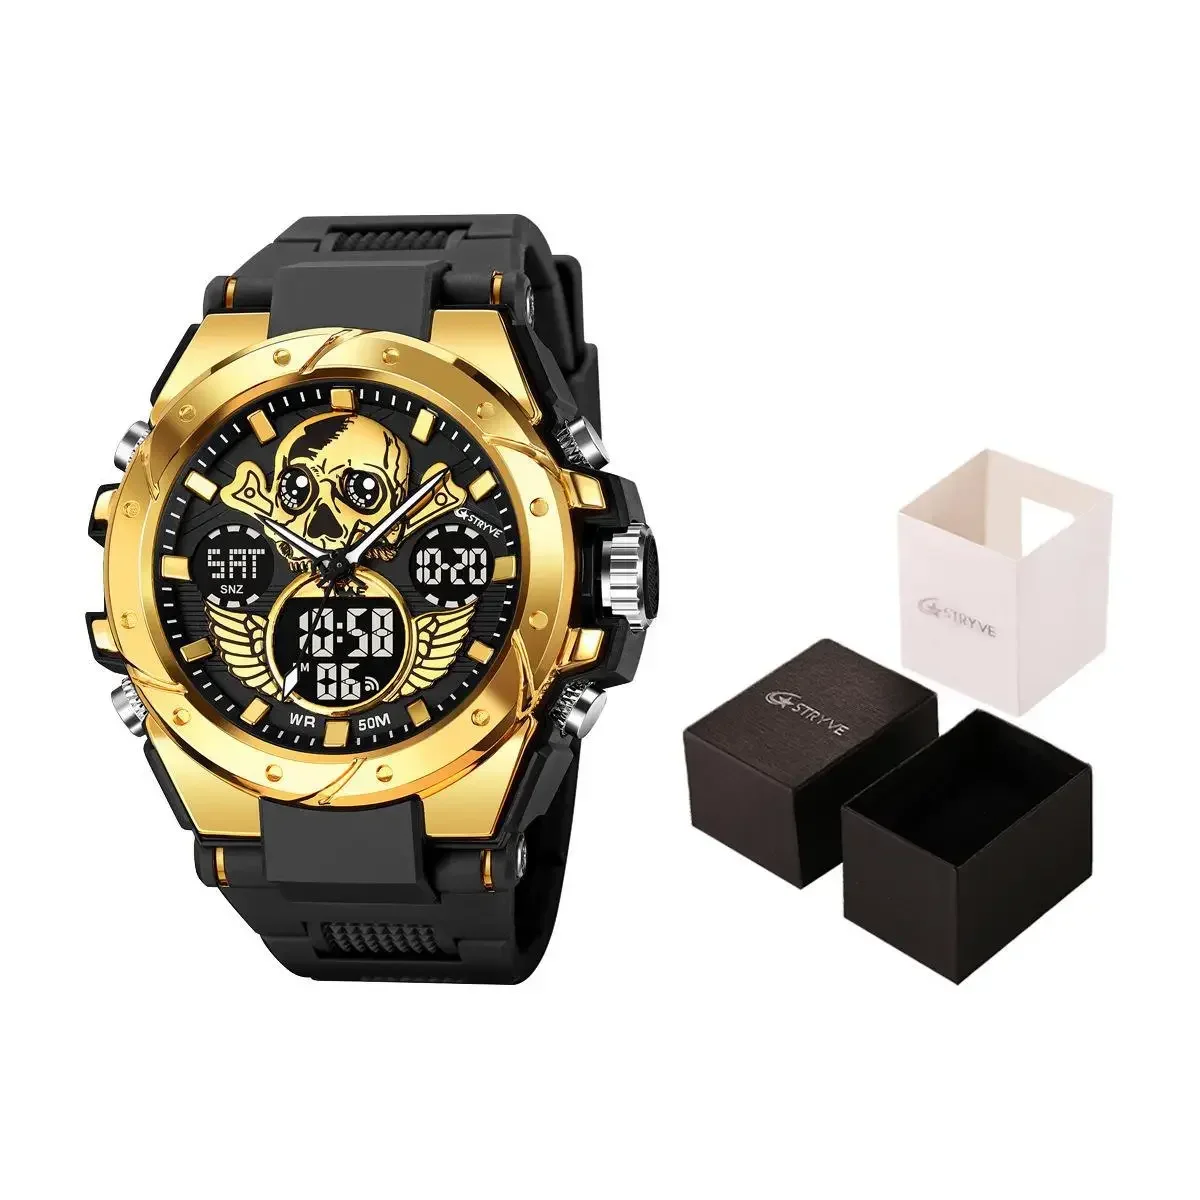 

New STRYVE Men's Watch Creative Skull Design Digital-Analog Dual Display Watch Calendar Week Stopwatch Multifunction Watch S8008